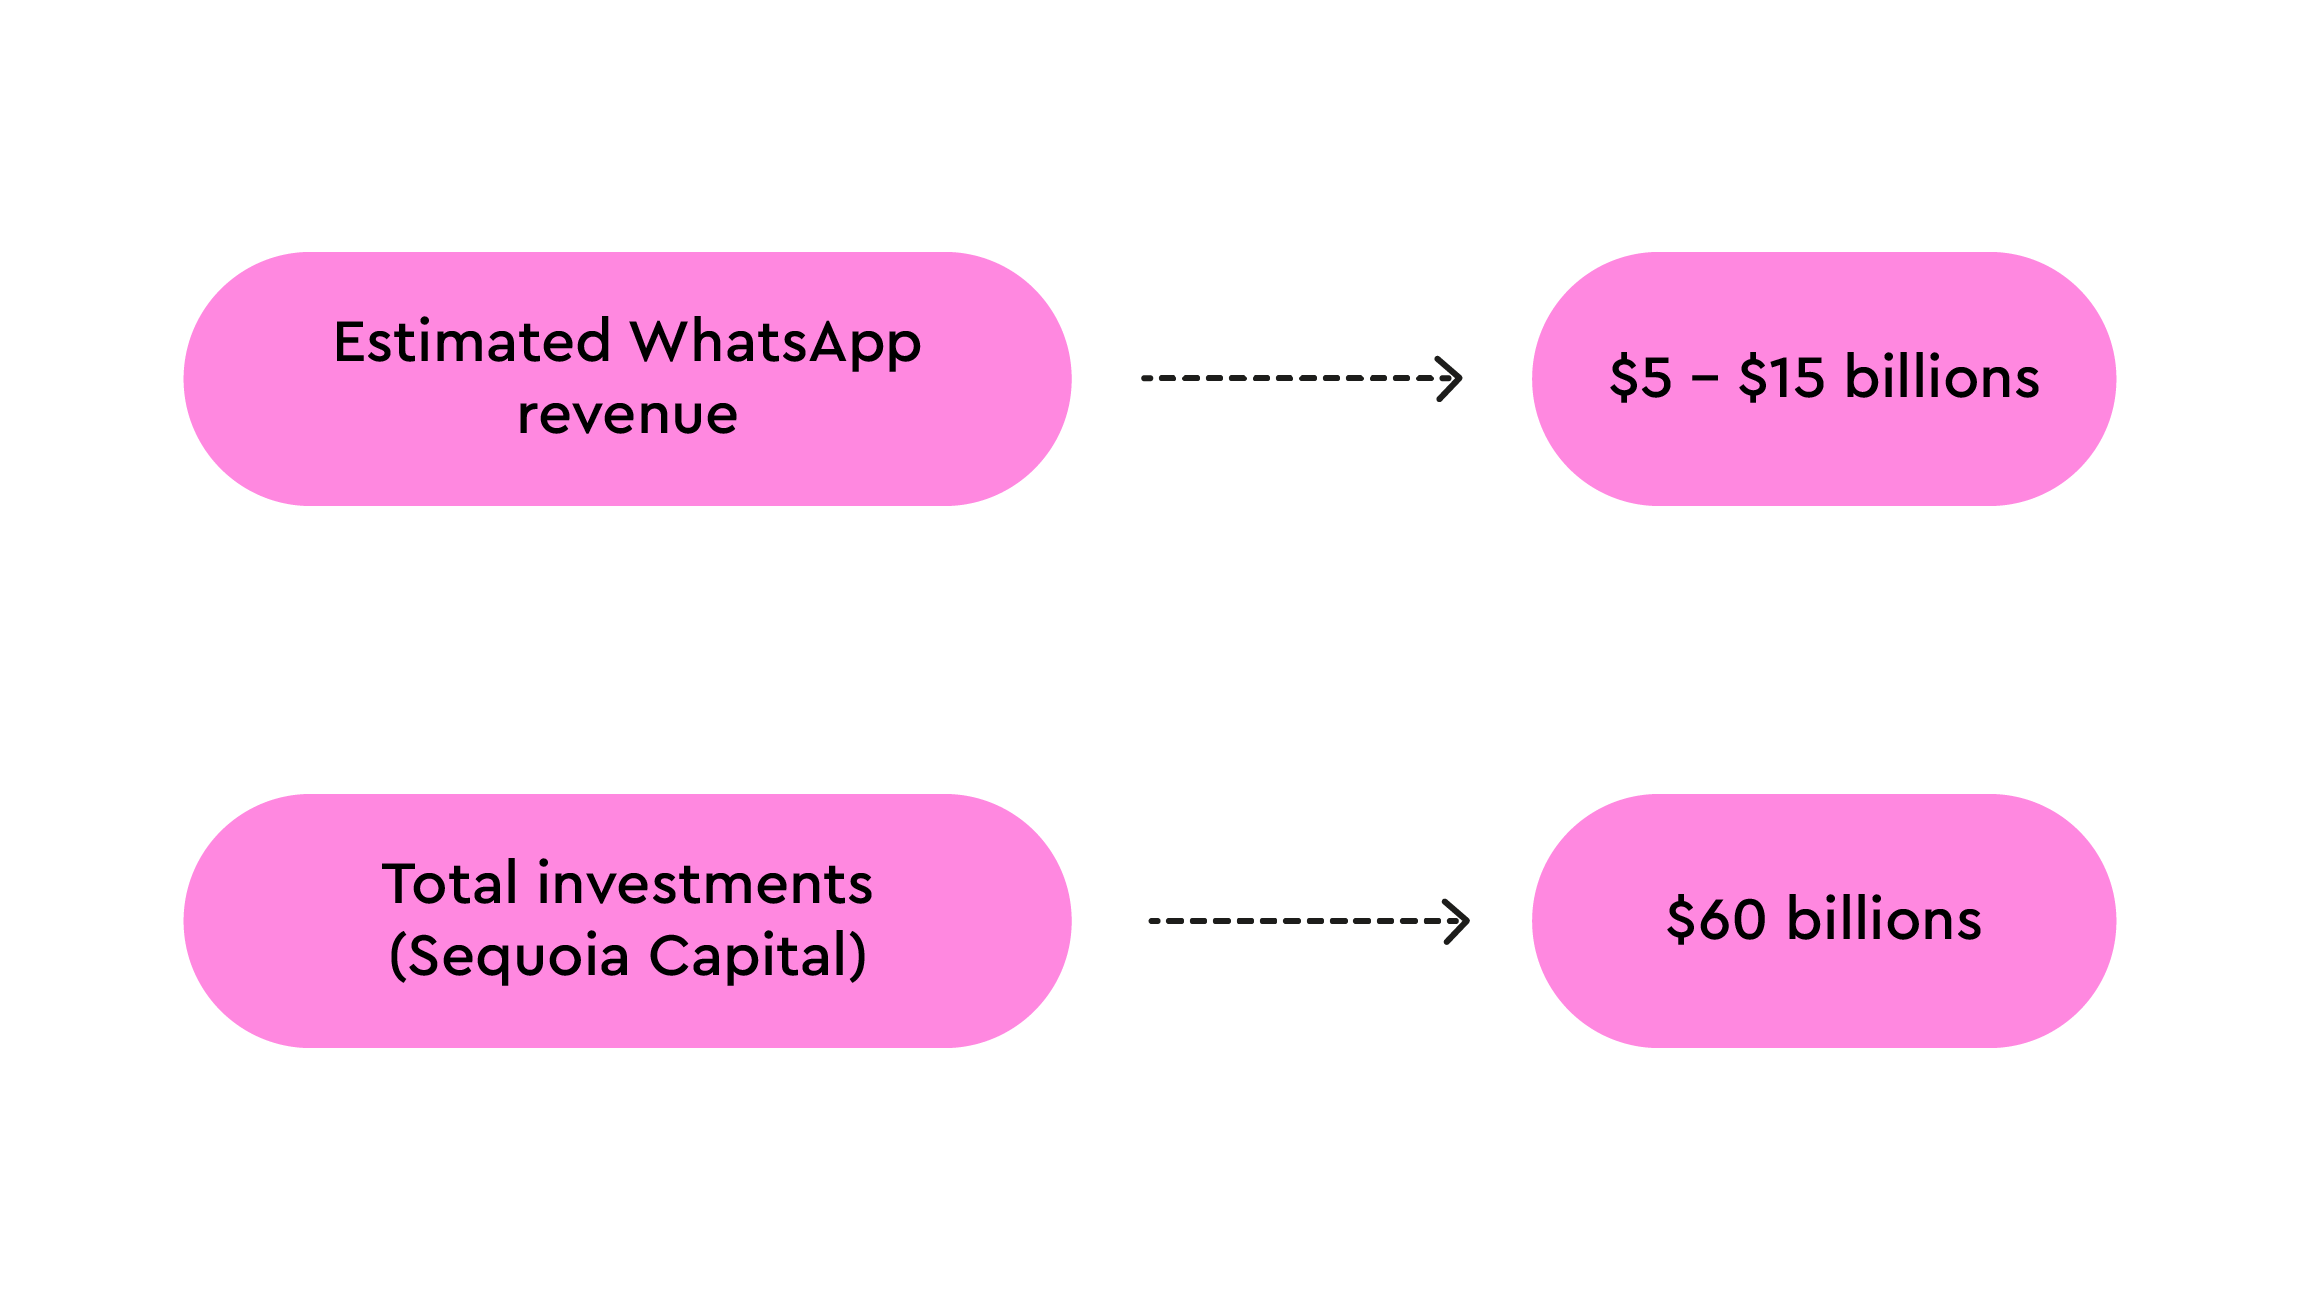 WhatsApp's revenue